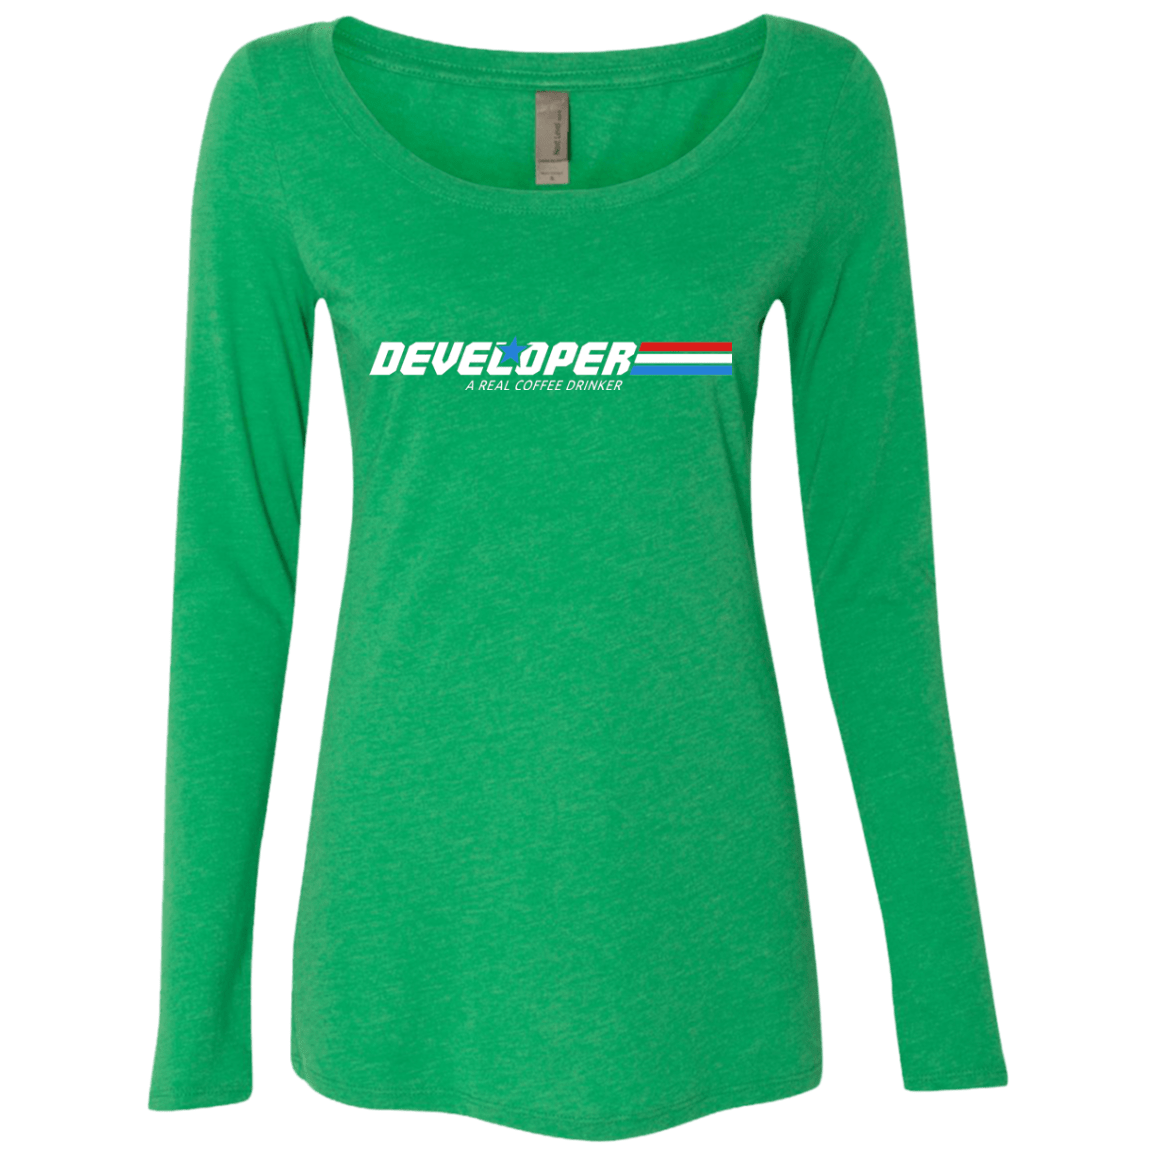 T-Shirts Envy / Small Developer - A Real Coffee Drinker Women's Triblend Long Sleeve Shirt